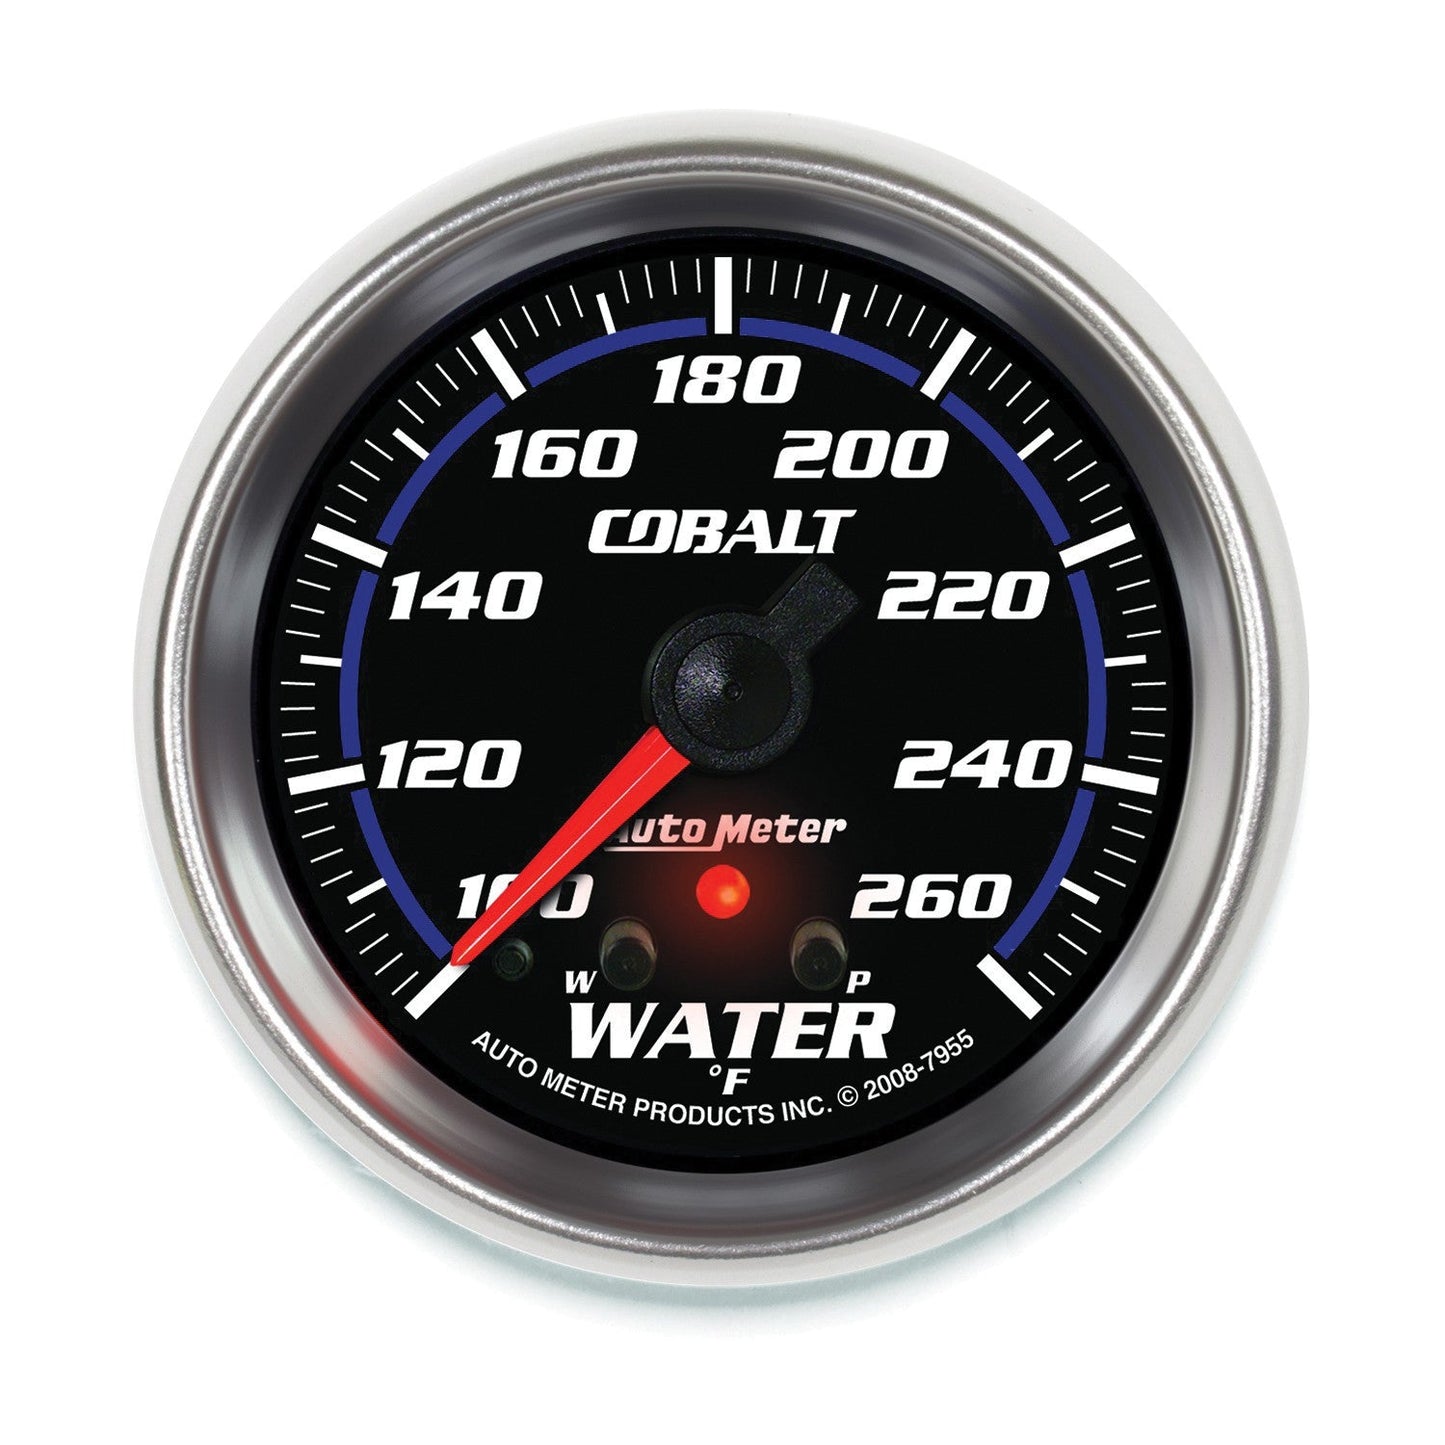 AutoMeter - 2-5/8" WATER TEMPERATURE, W/ PEAK & WARN, 100-260 °F, STEPPER MOTOR, COBALT (7955)